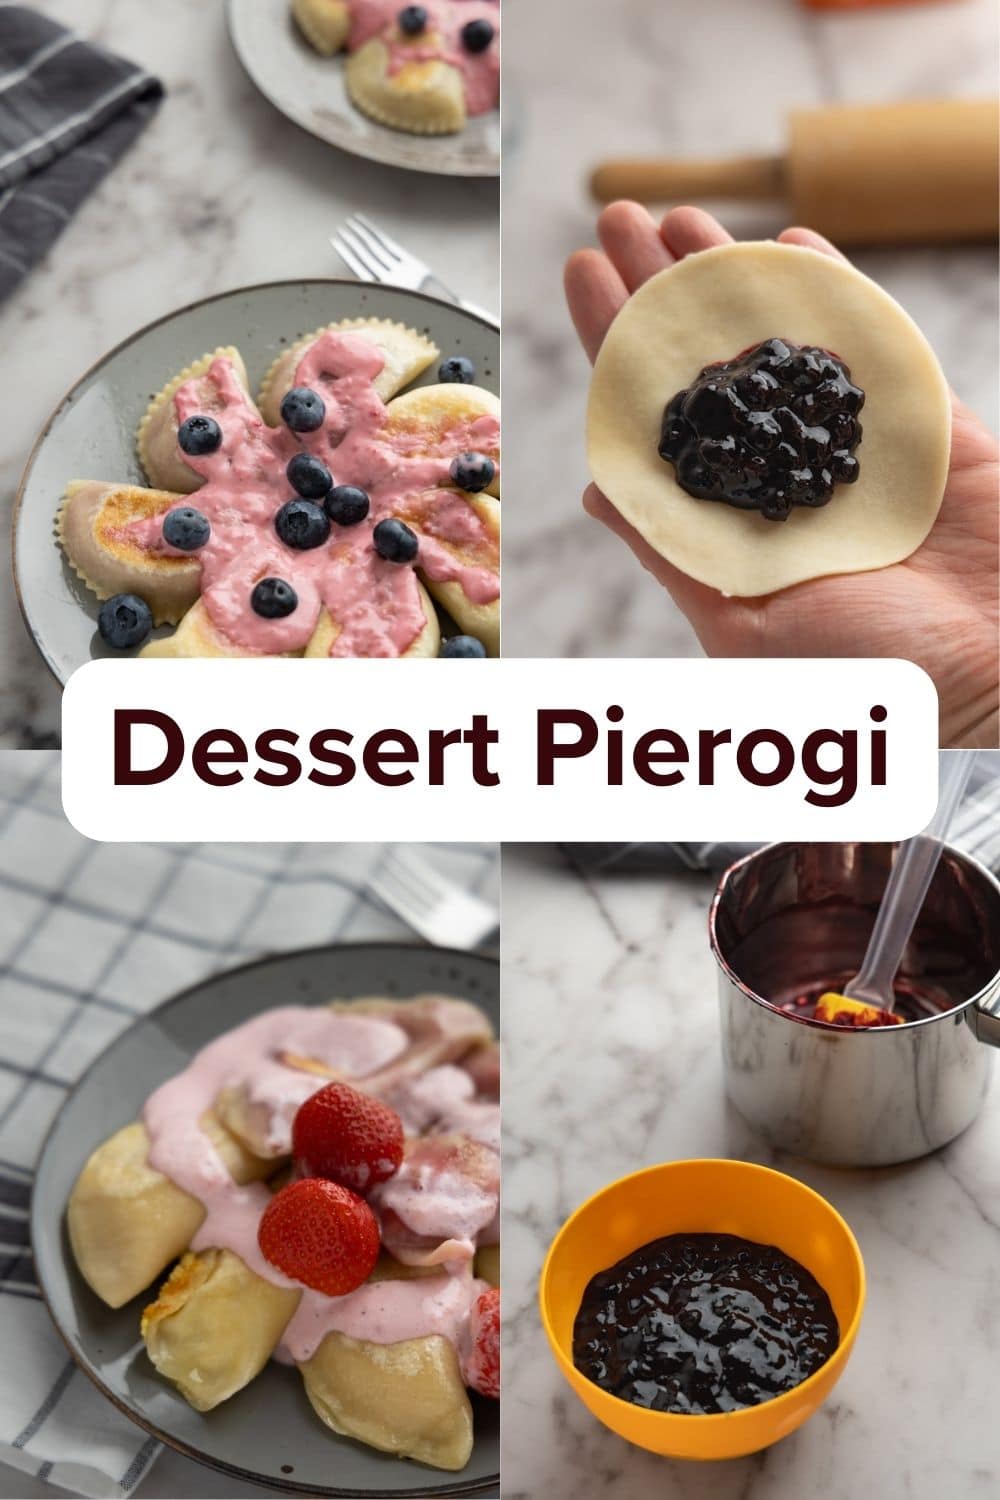 Dessert Pierogi: 6 Sweet Pierogi Filling Ideas to Try